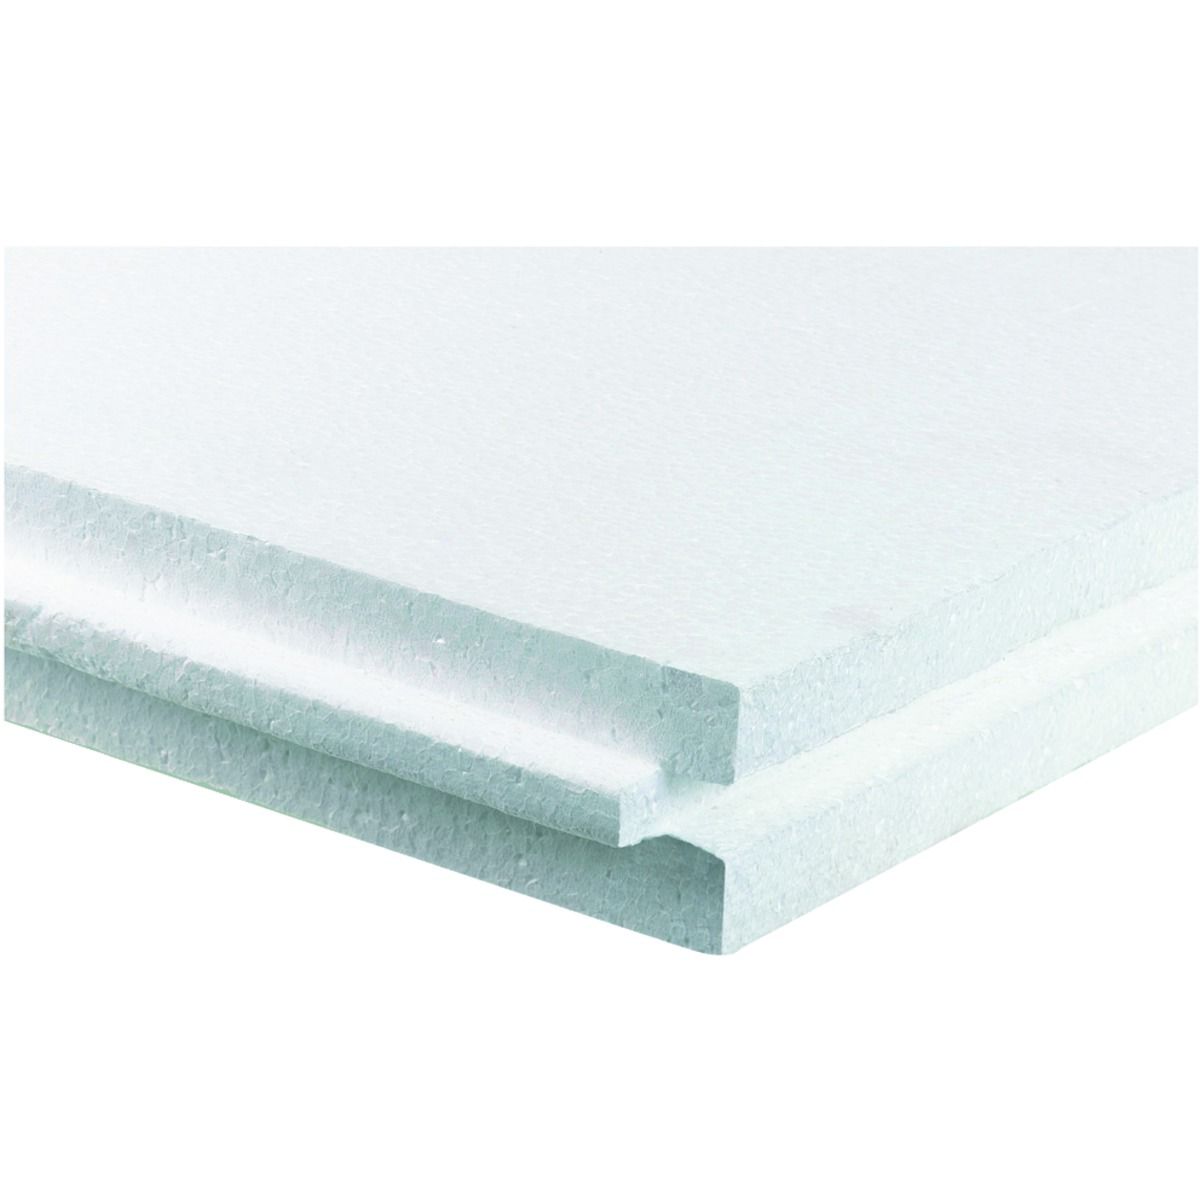 Wickes T & G EPS 70E Polystyrene Insulation Board - 1200mm x 450mm x 50mm